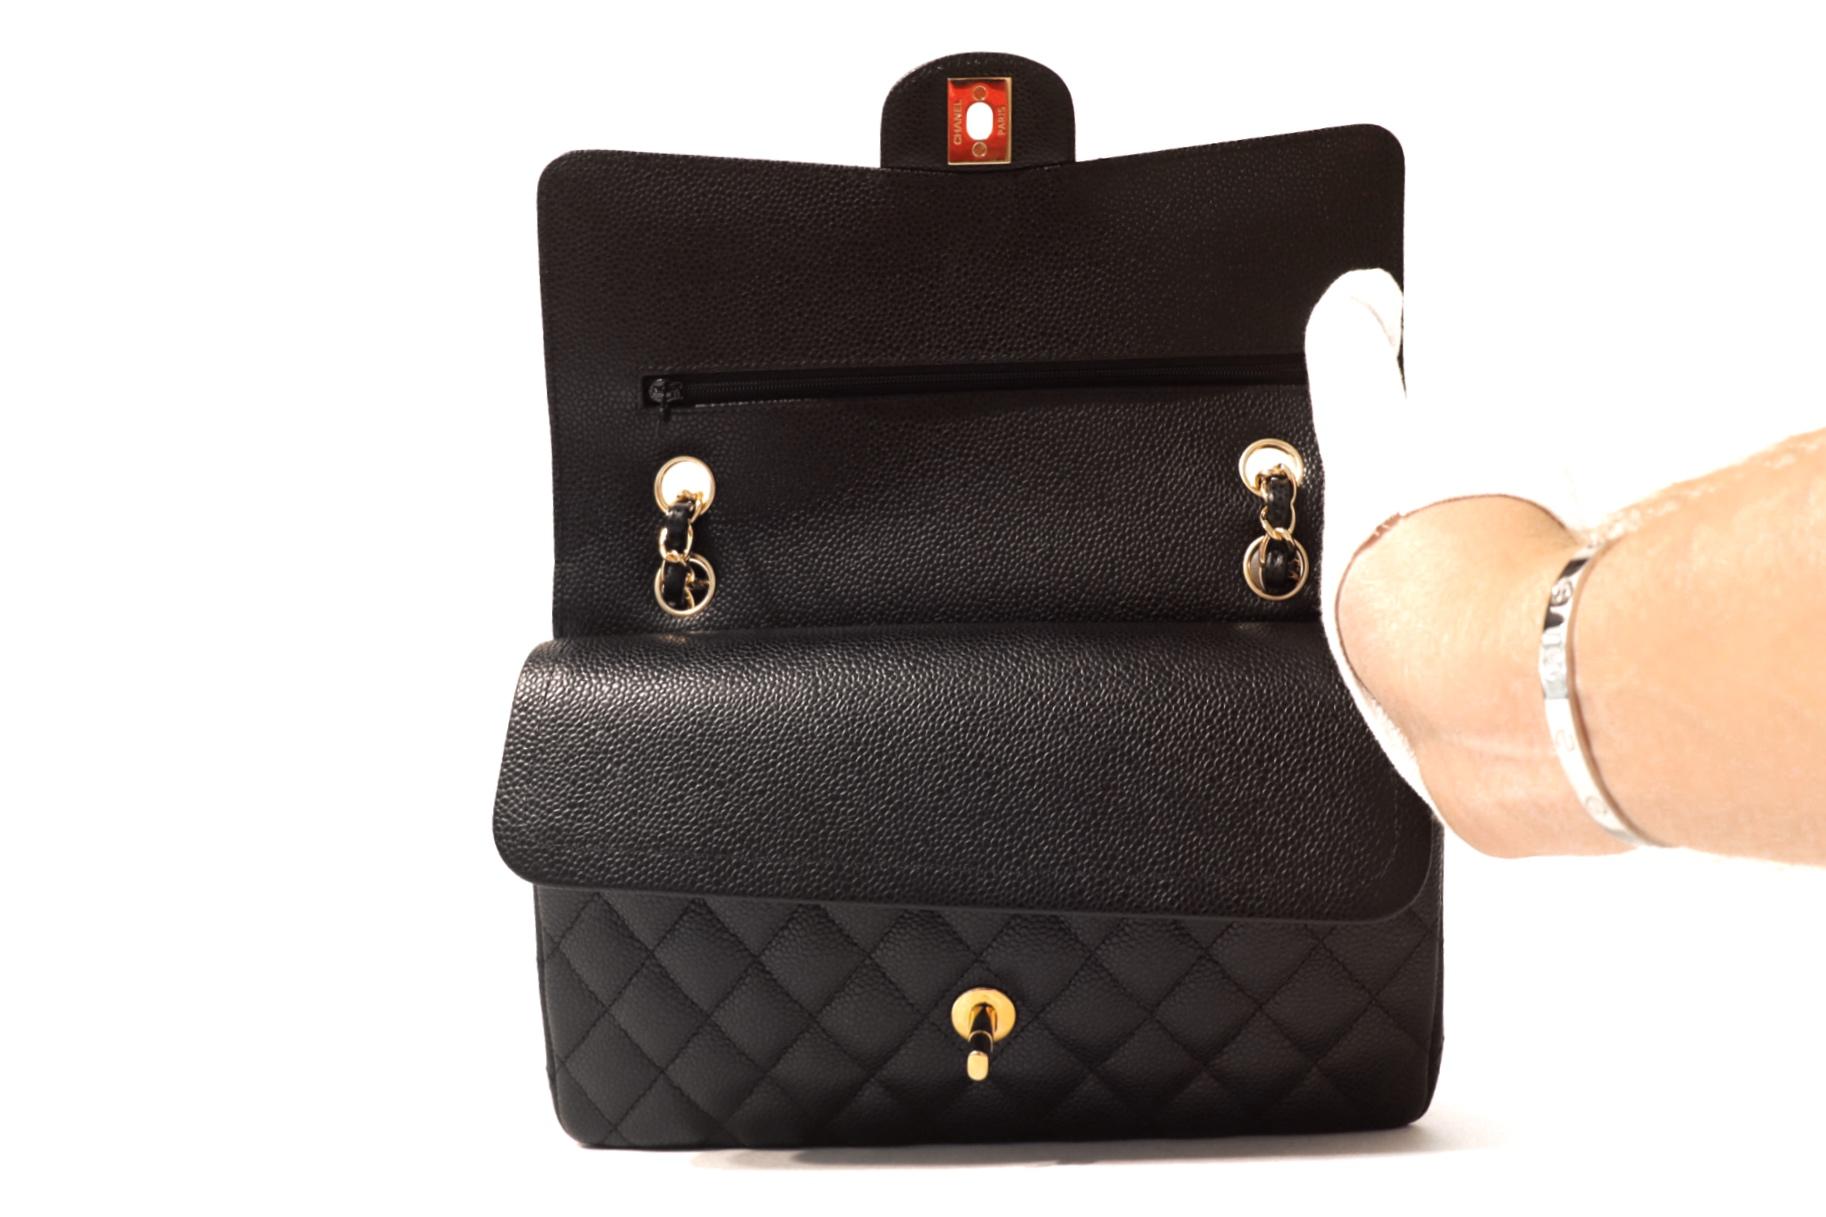 Chanel Black Caviar Leather Medium Classic Bag 2